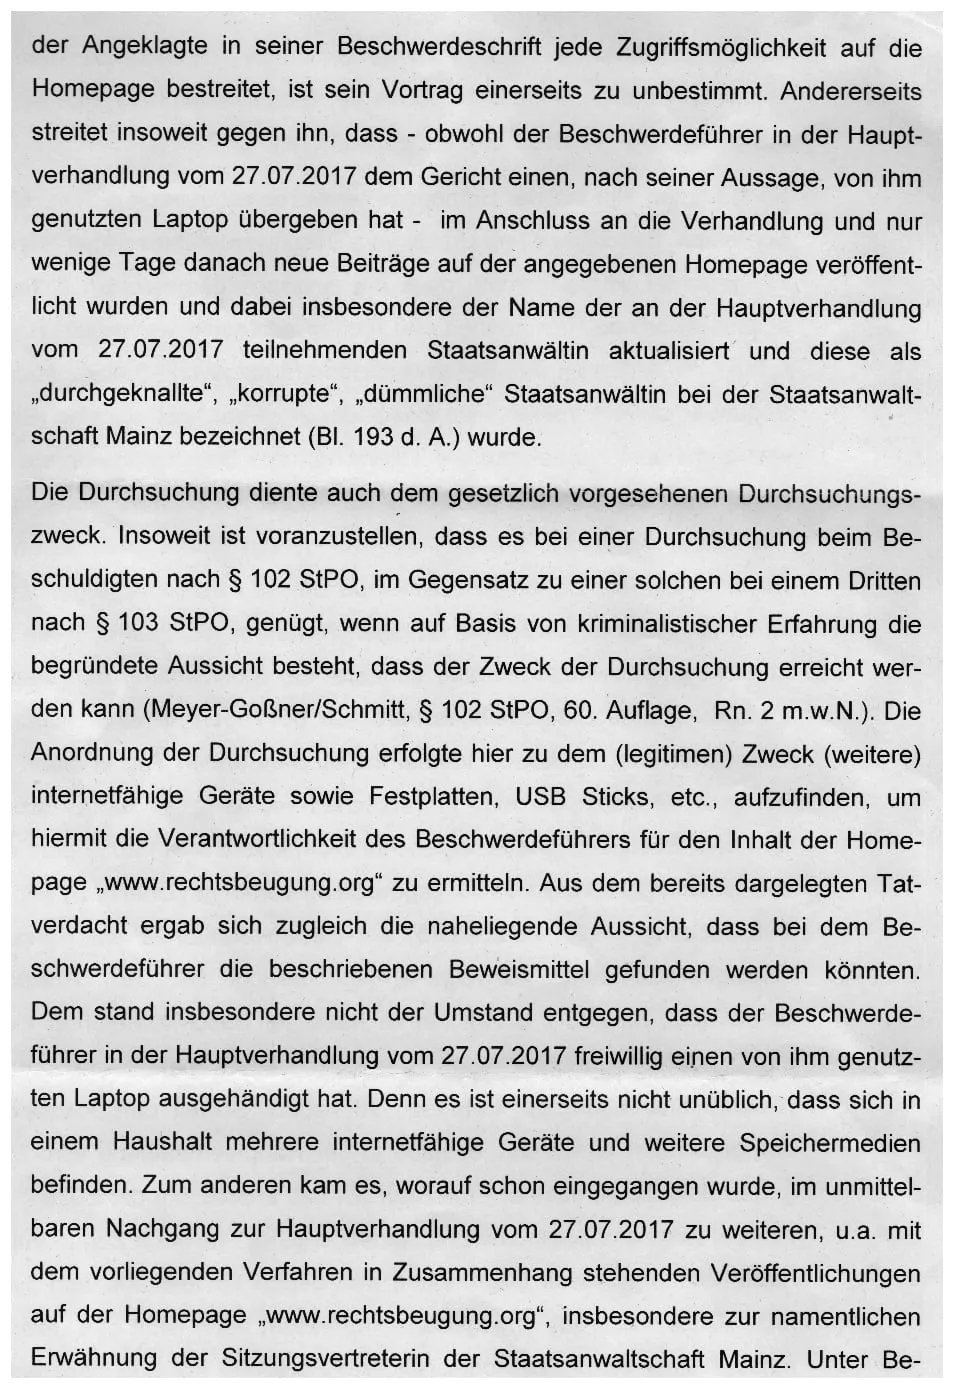 Beschluss Landgericht Mainz 03.04.2018 Beschwerde Wohnungsdurchsuchung Richter Koch Richter Poetsch Richter Althaus-06